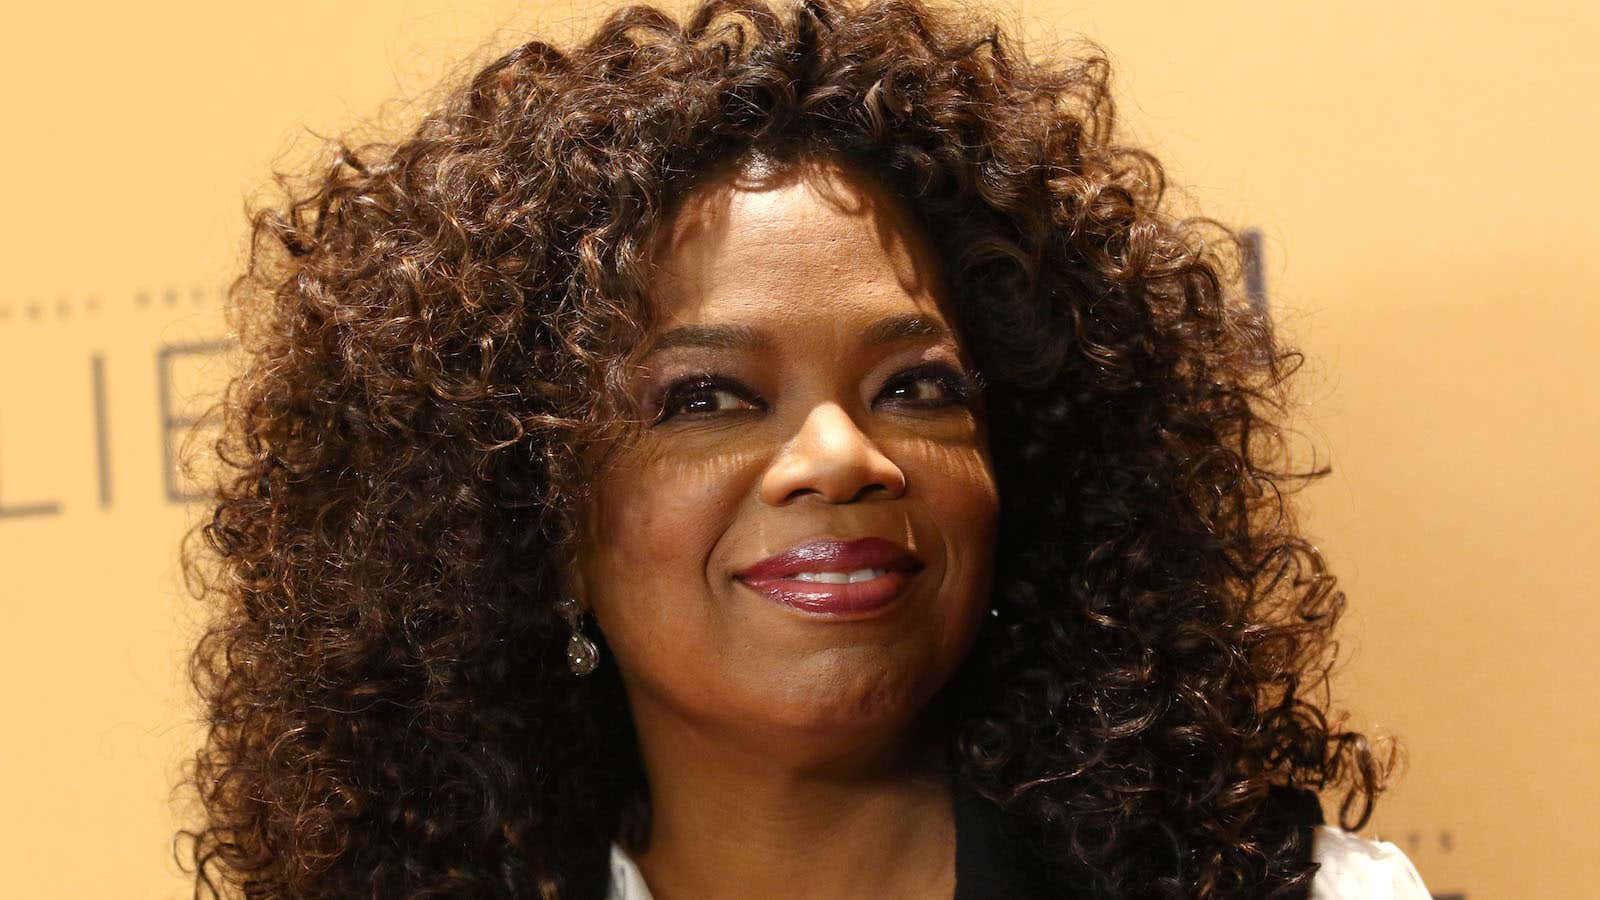 The Oprah effect.